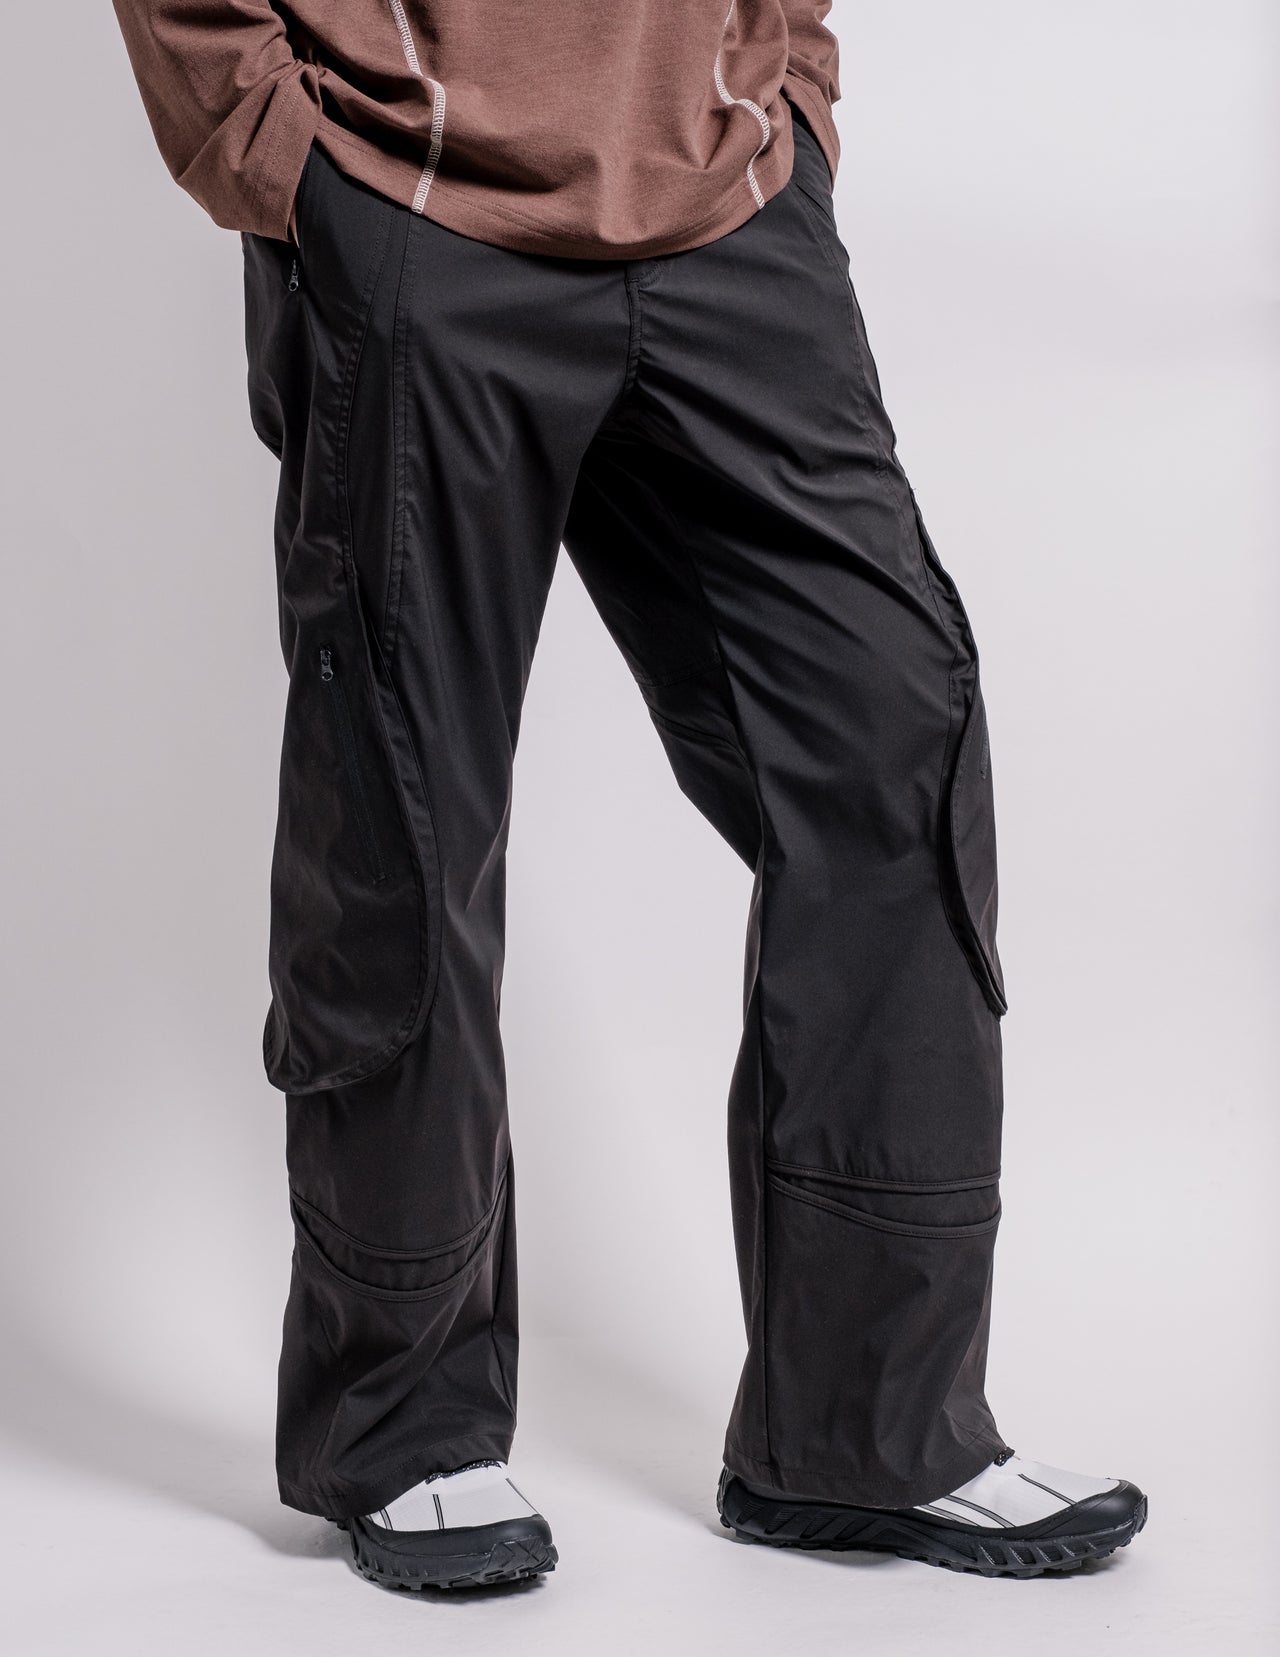 Covering Pocket Pants in Black